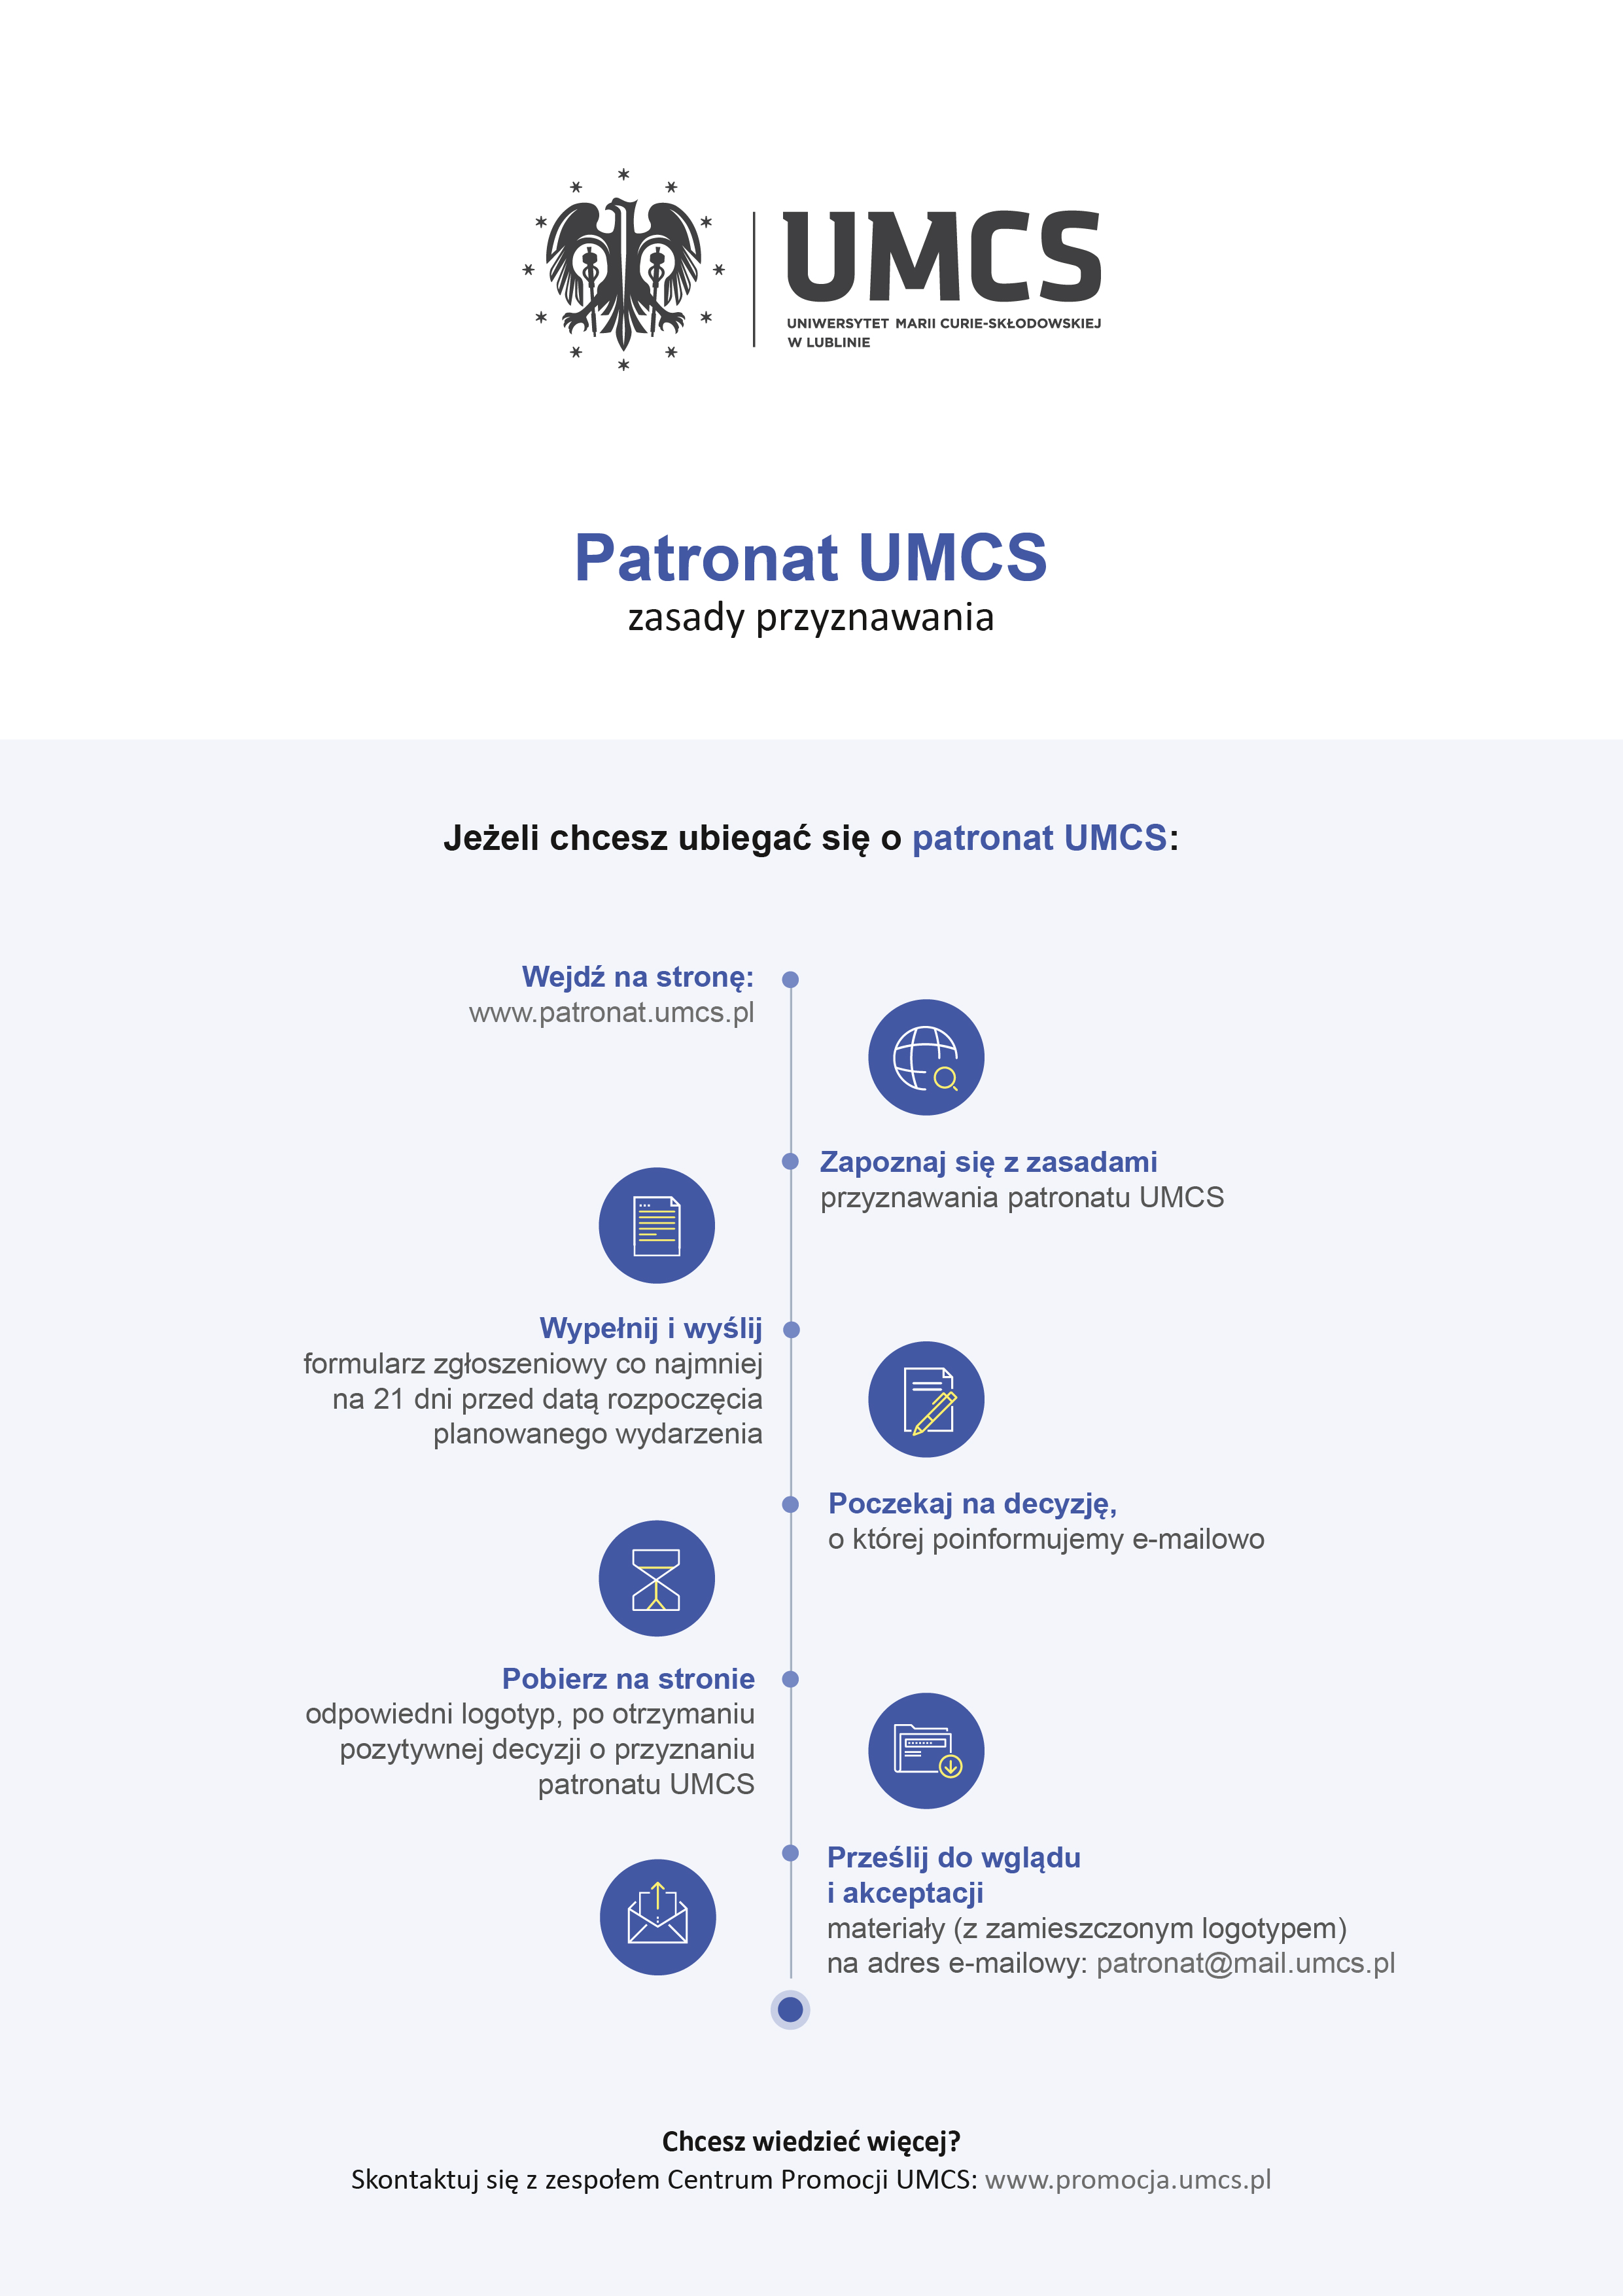 UMCS_Patronat UMCS_.jpg